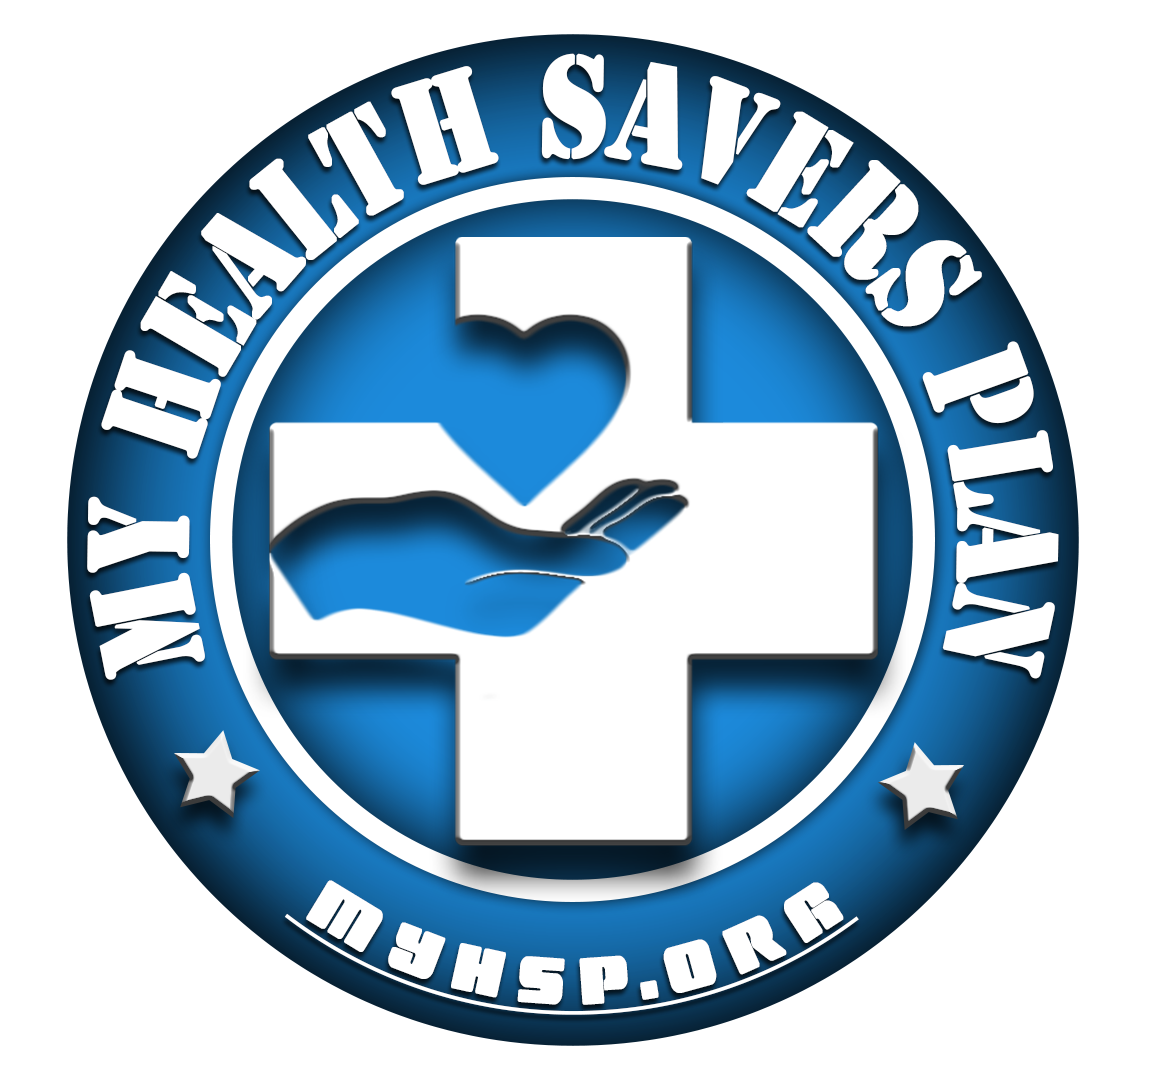 My Health Savers Plan